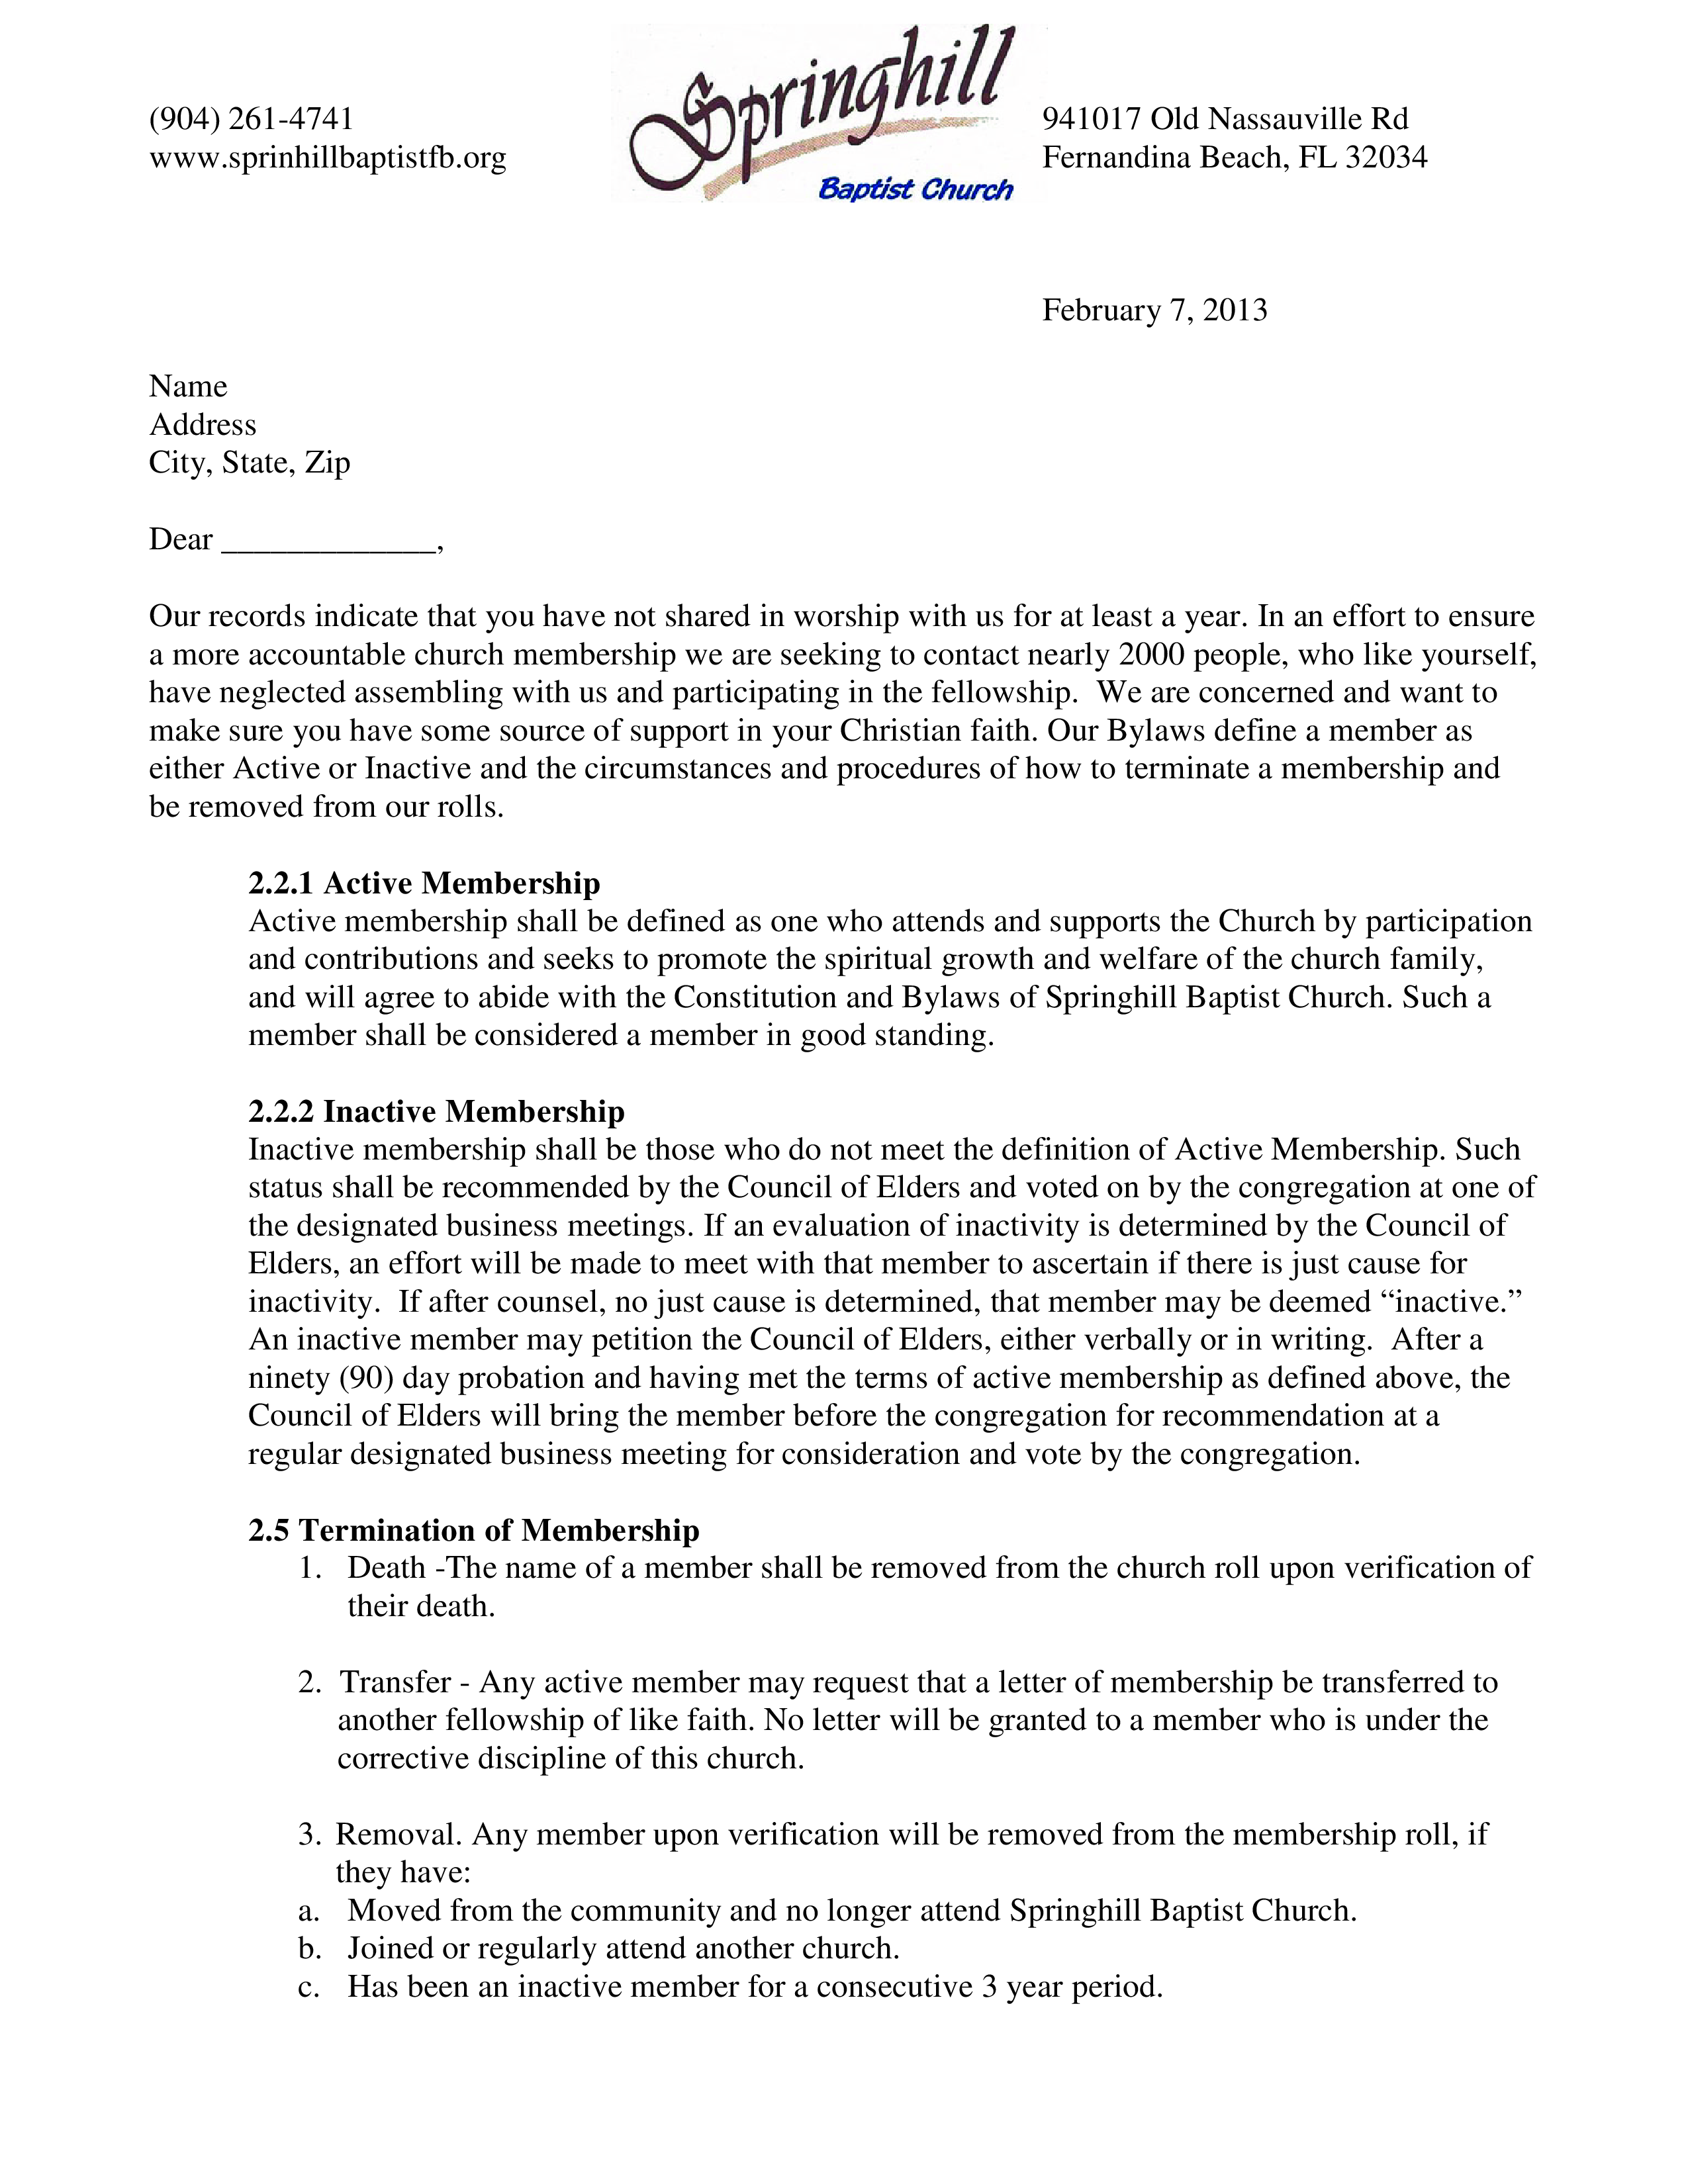 Church Membership Termination Letter main image